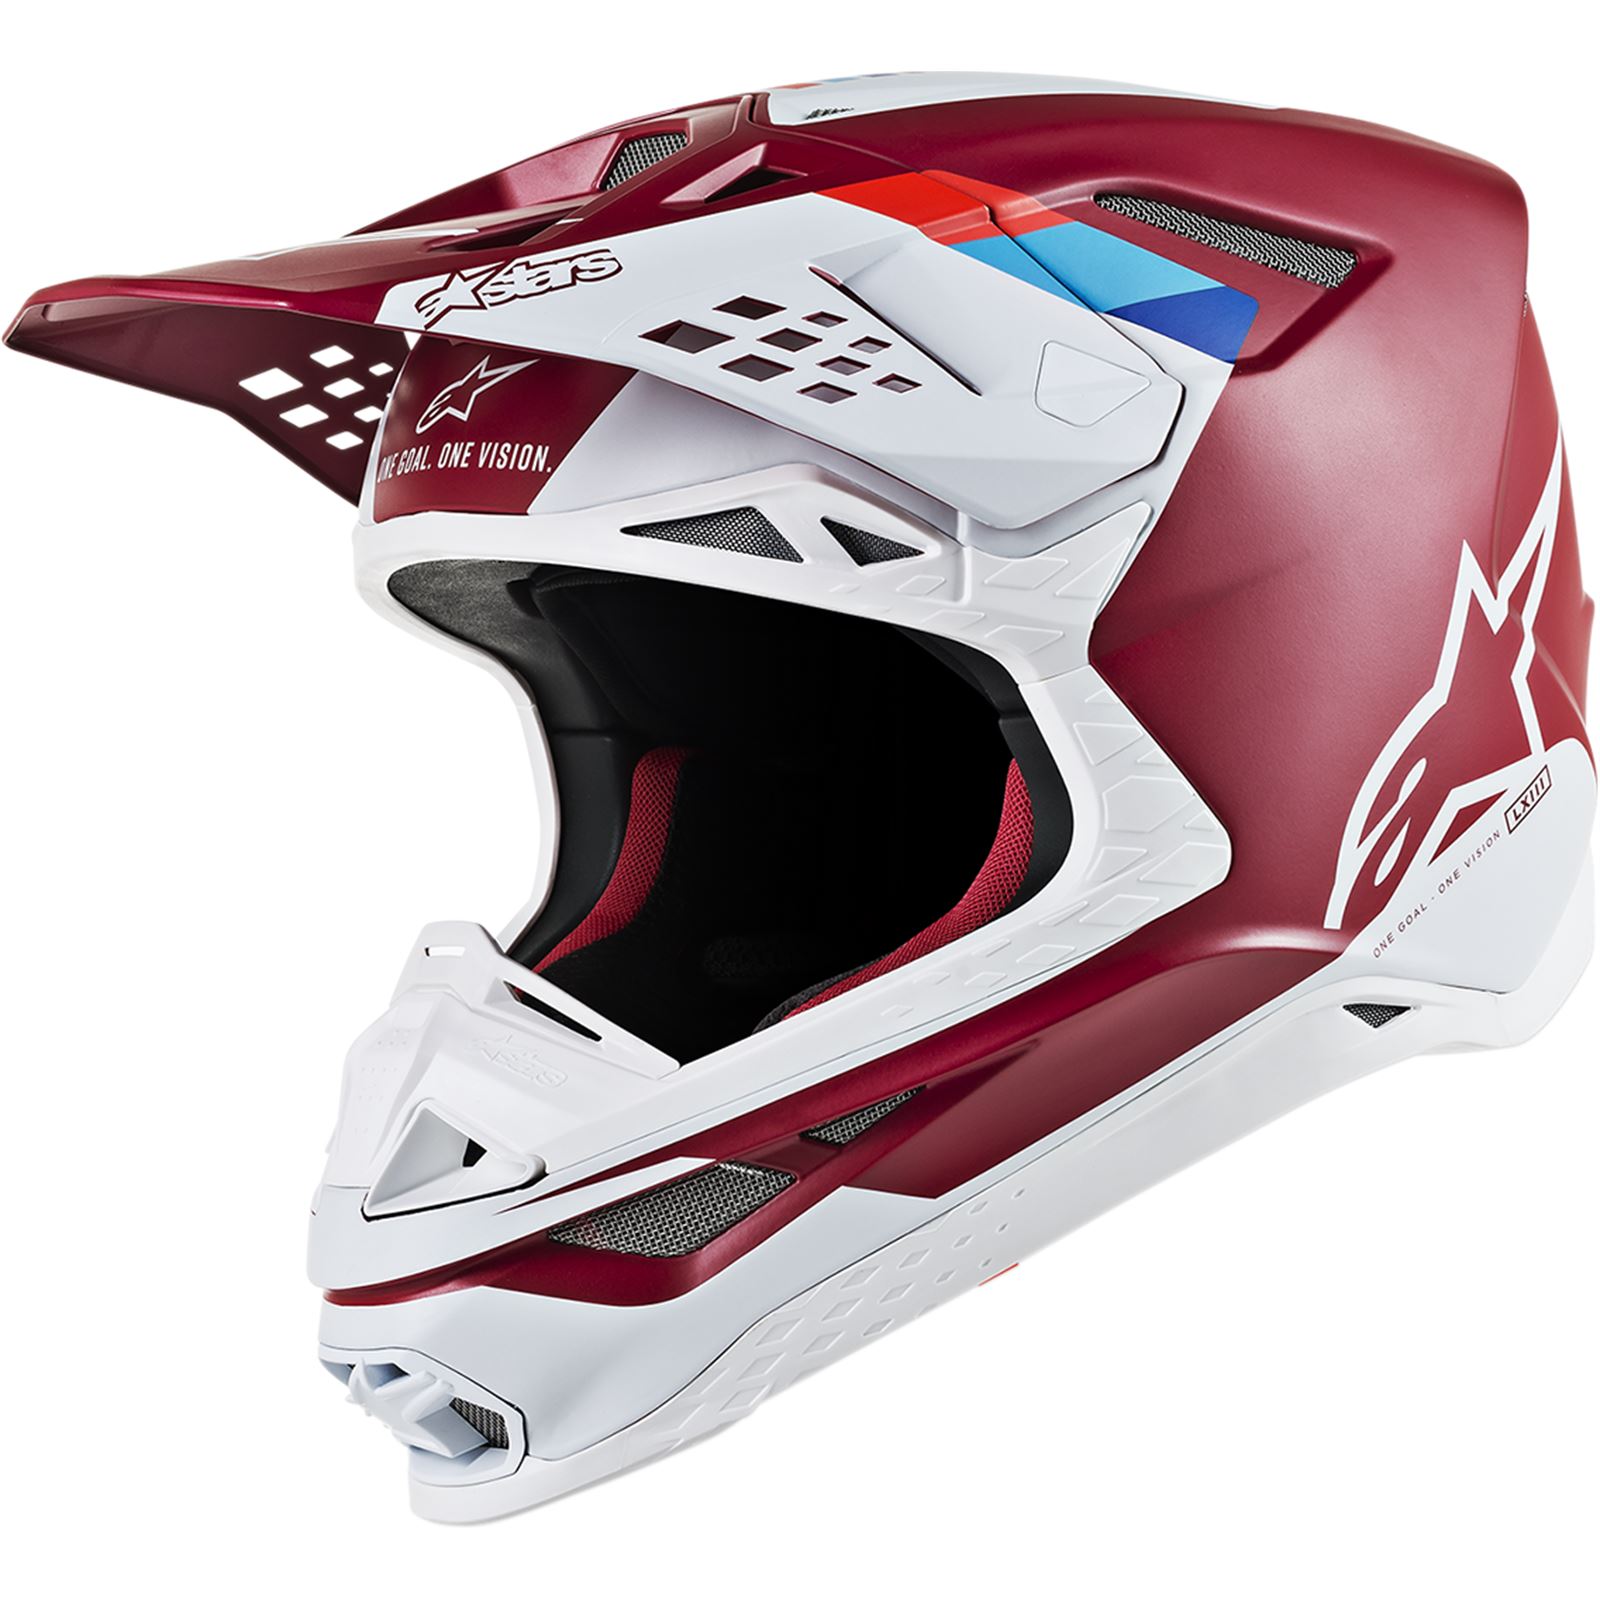 Alpinestars Supertech M8 Helmet - Contact - MIPS - Dark Red/White - Medium